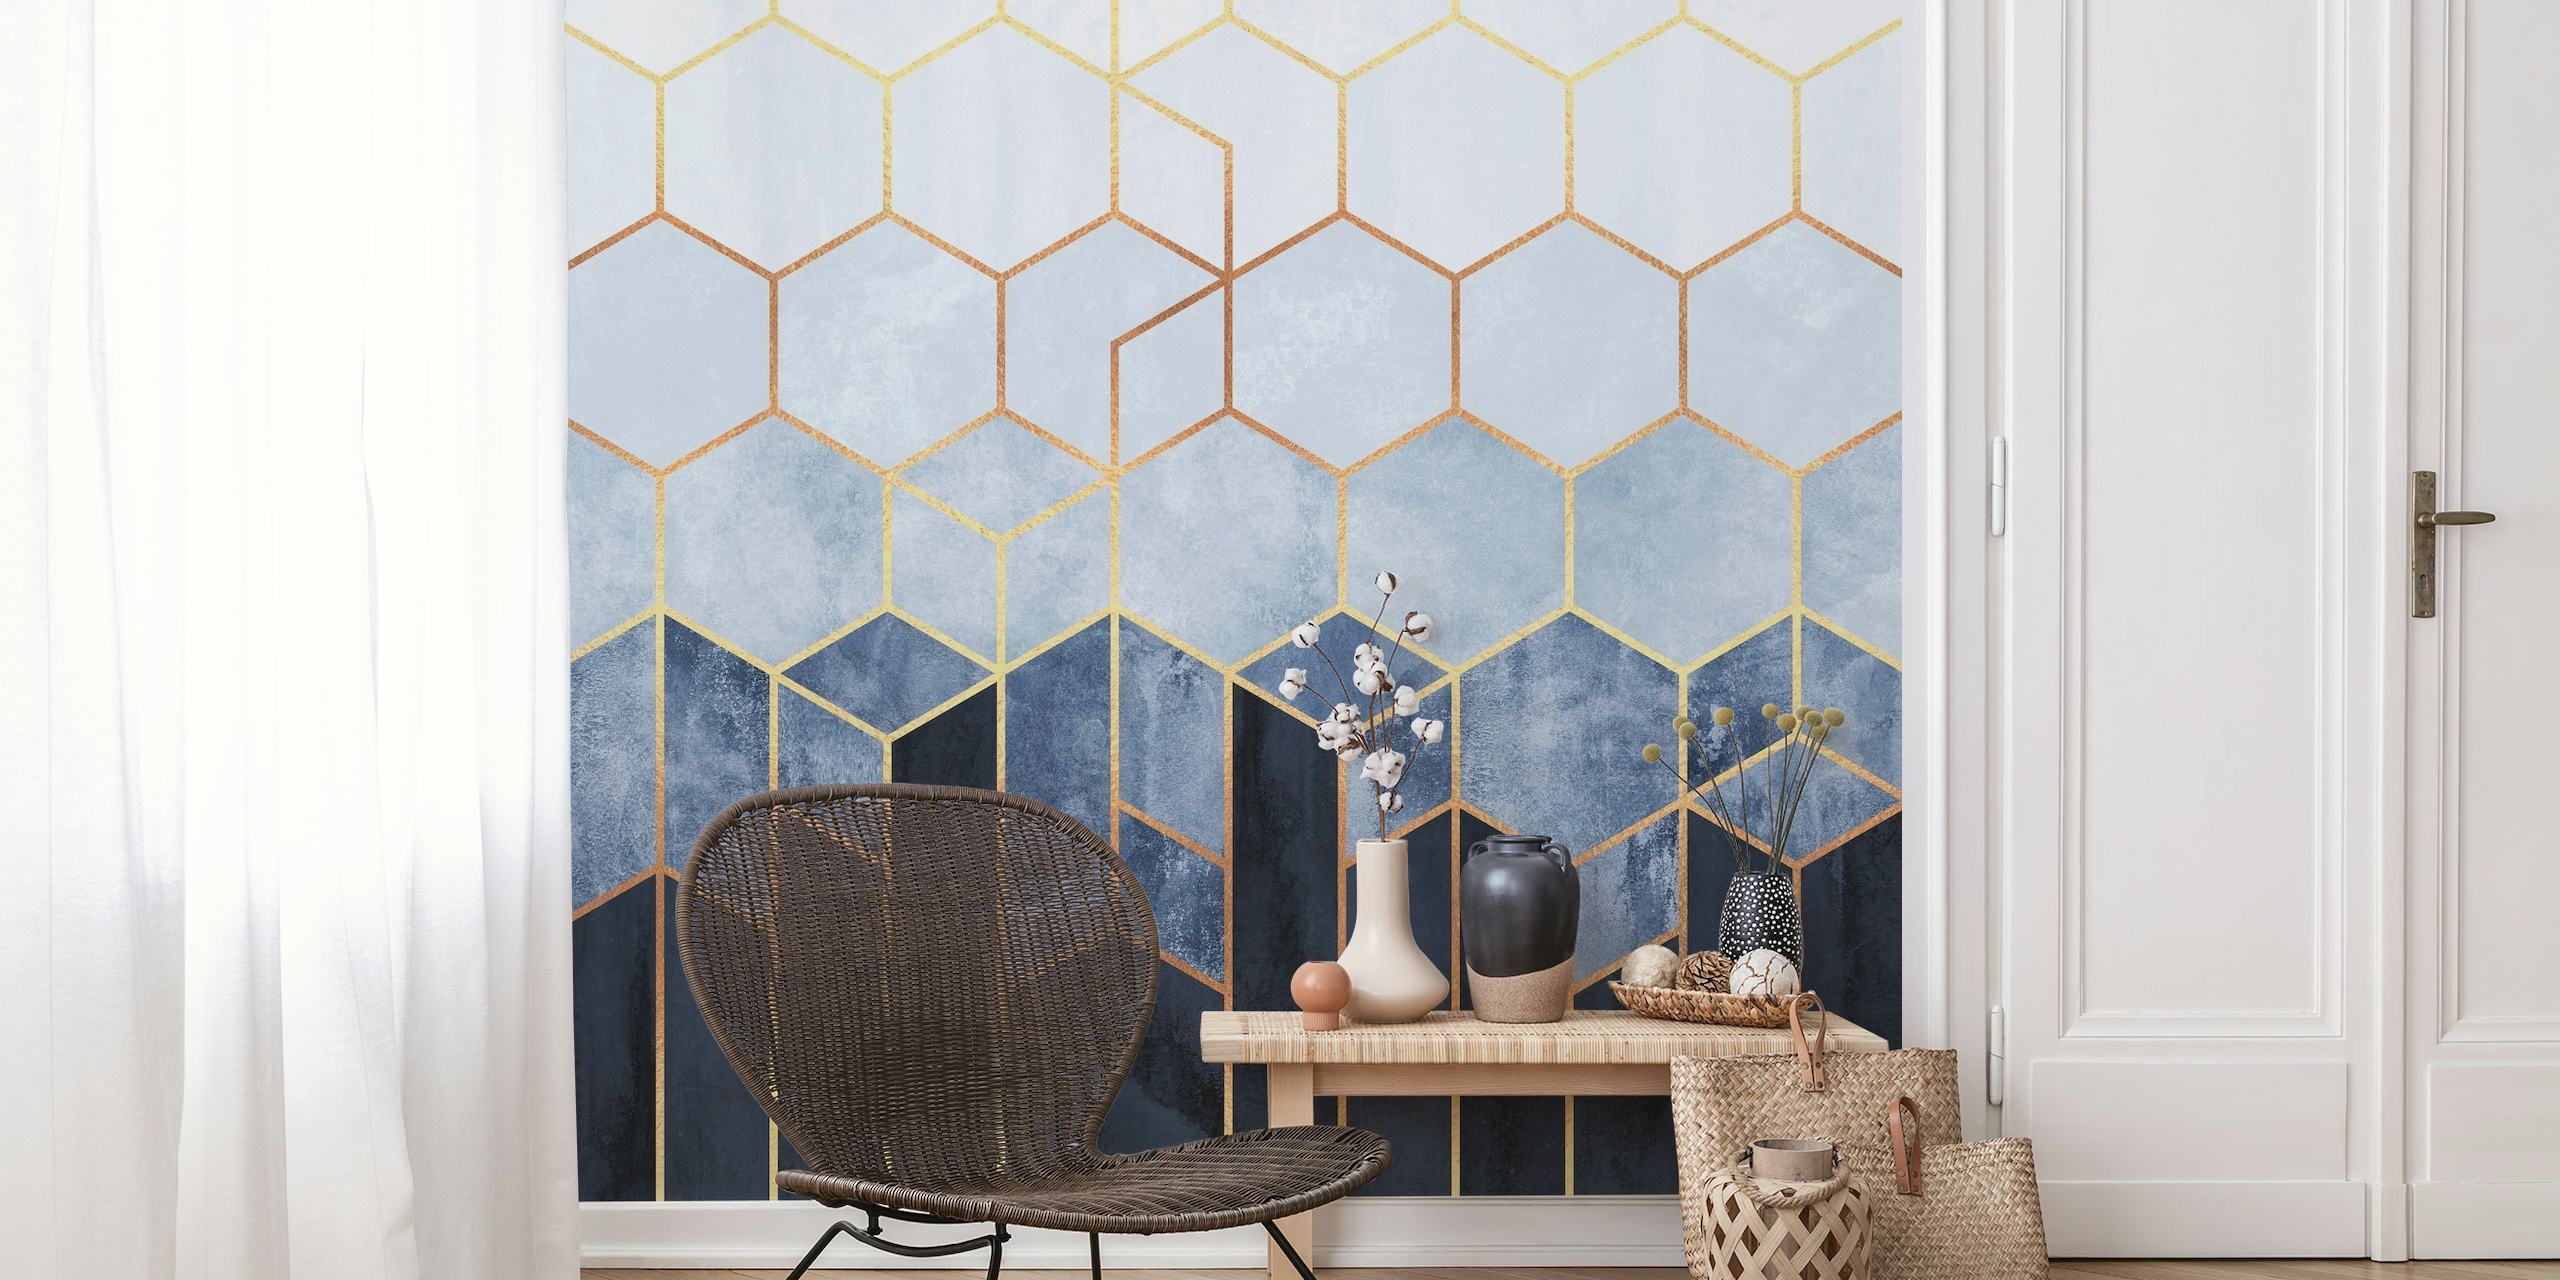 Stunning display of Blue Hexagonal Wallpaper